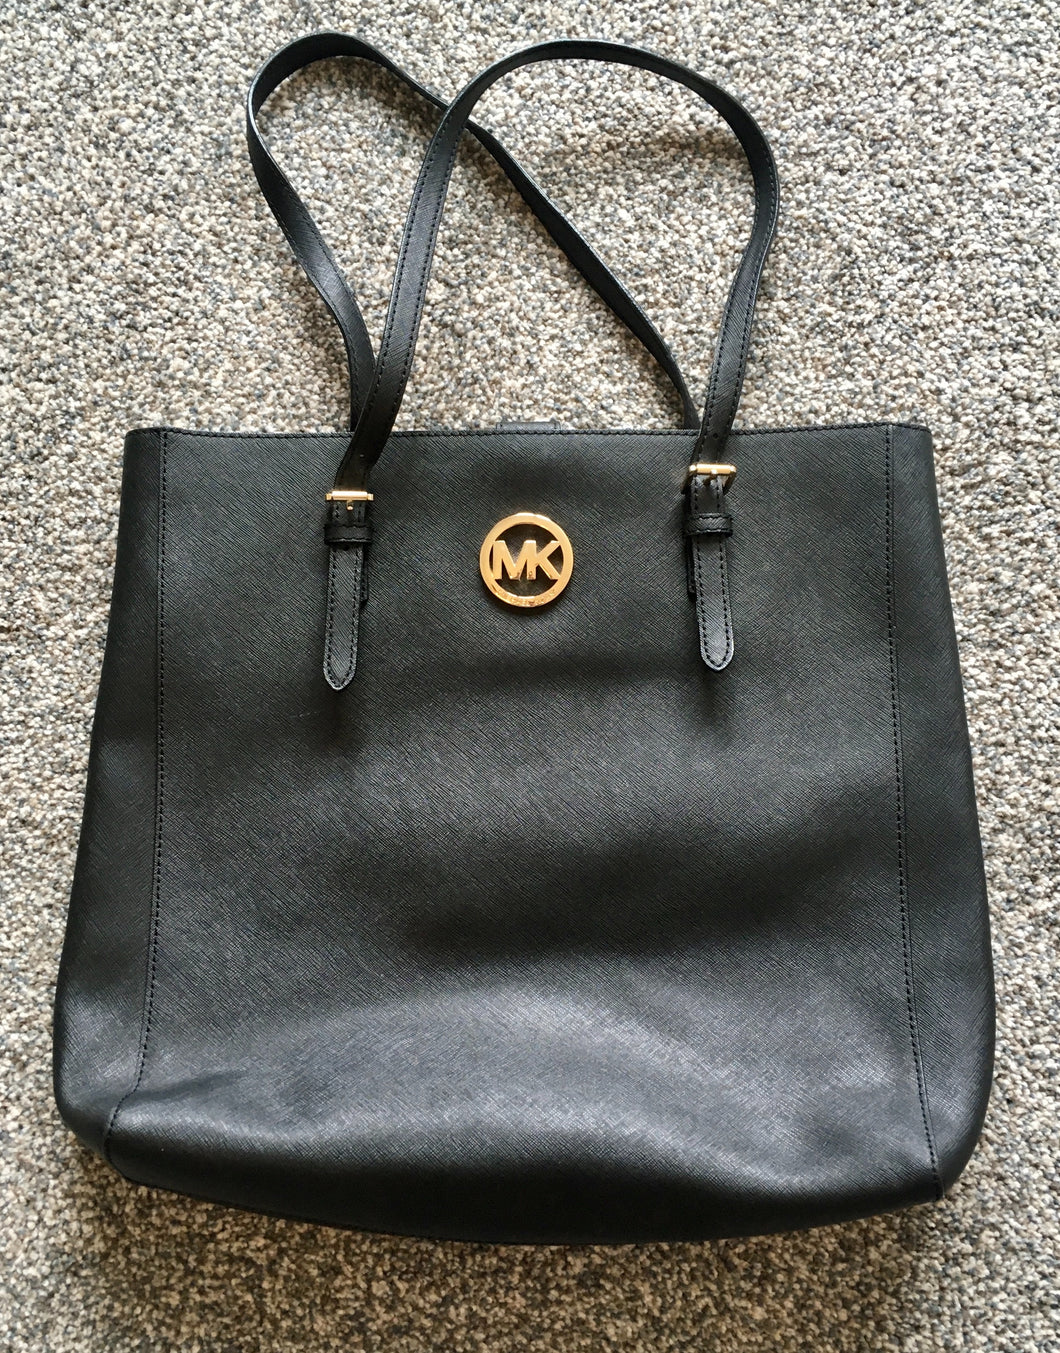 Michael Kors Black Leather Handbag One Size